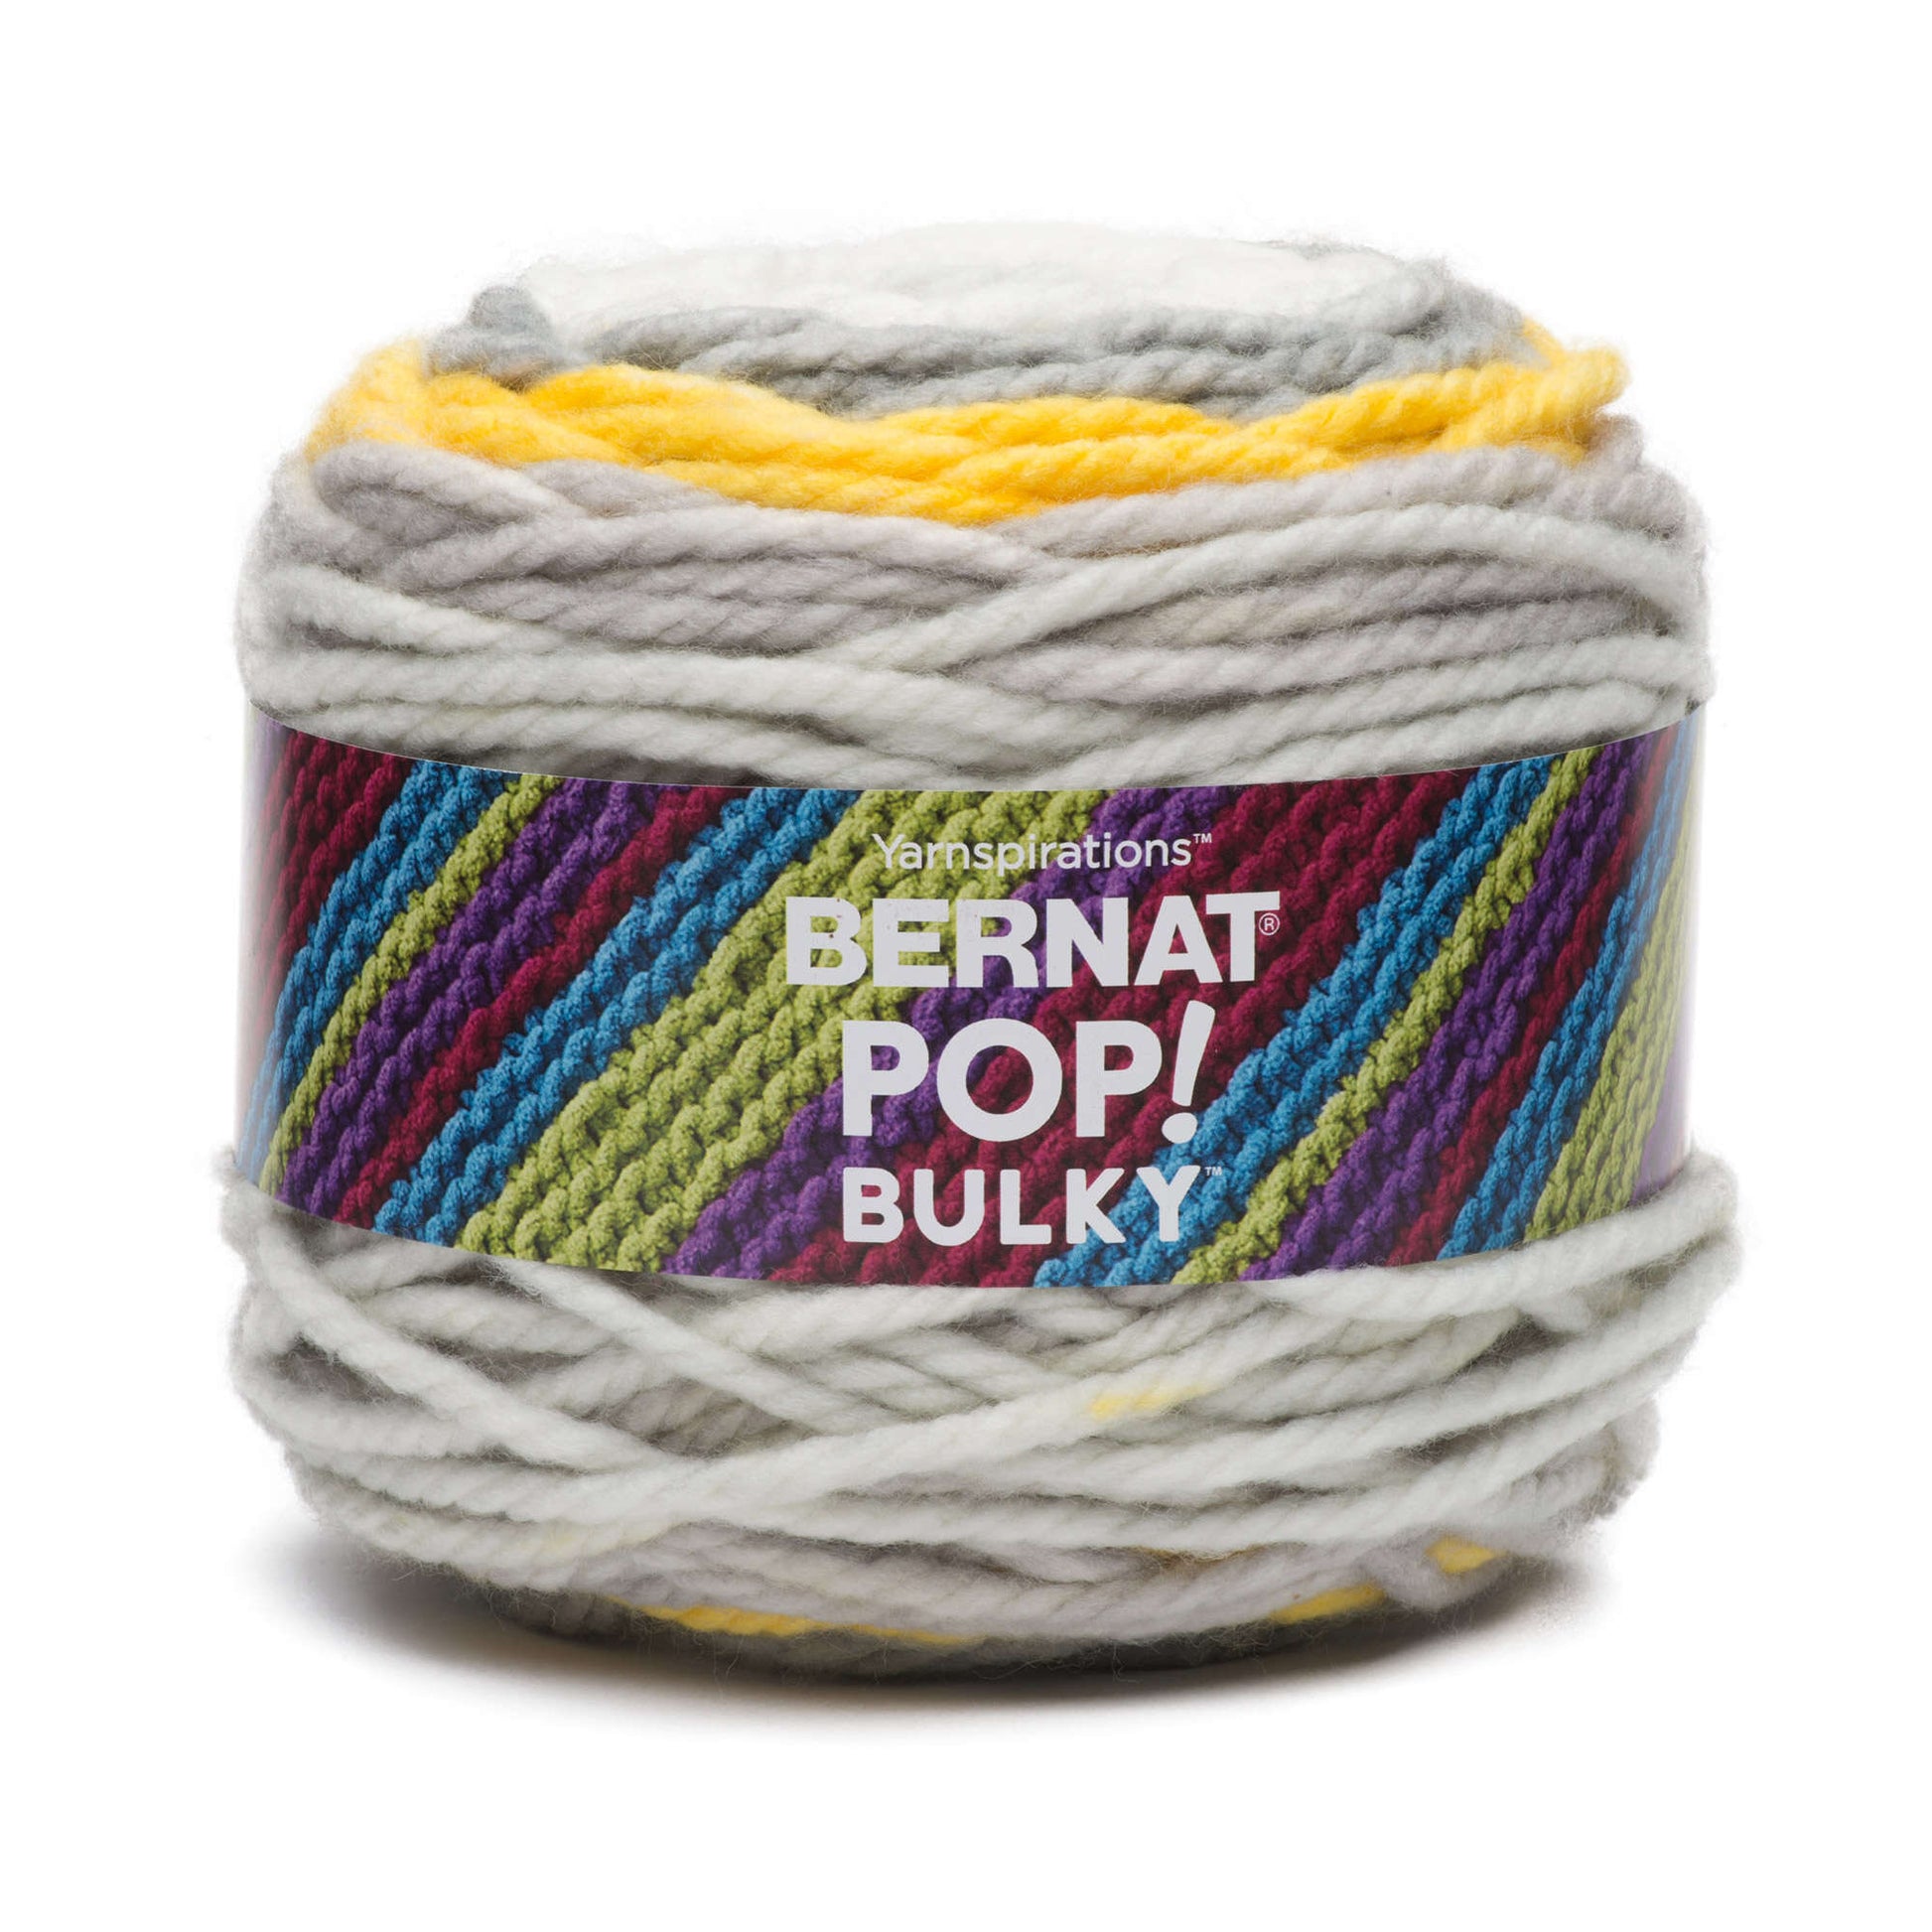 Bernat Pop! Bulky Yarn - Discontinued Shades Zesty Gray